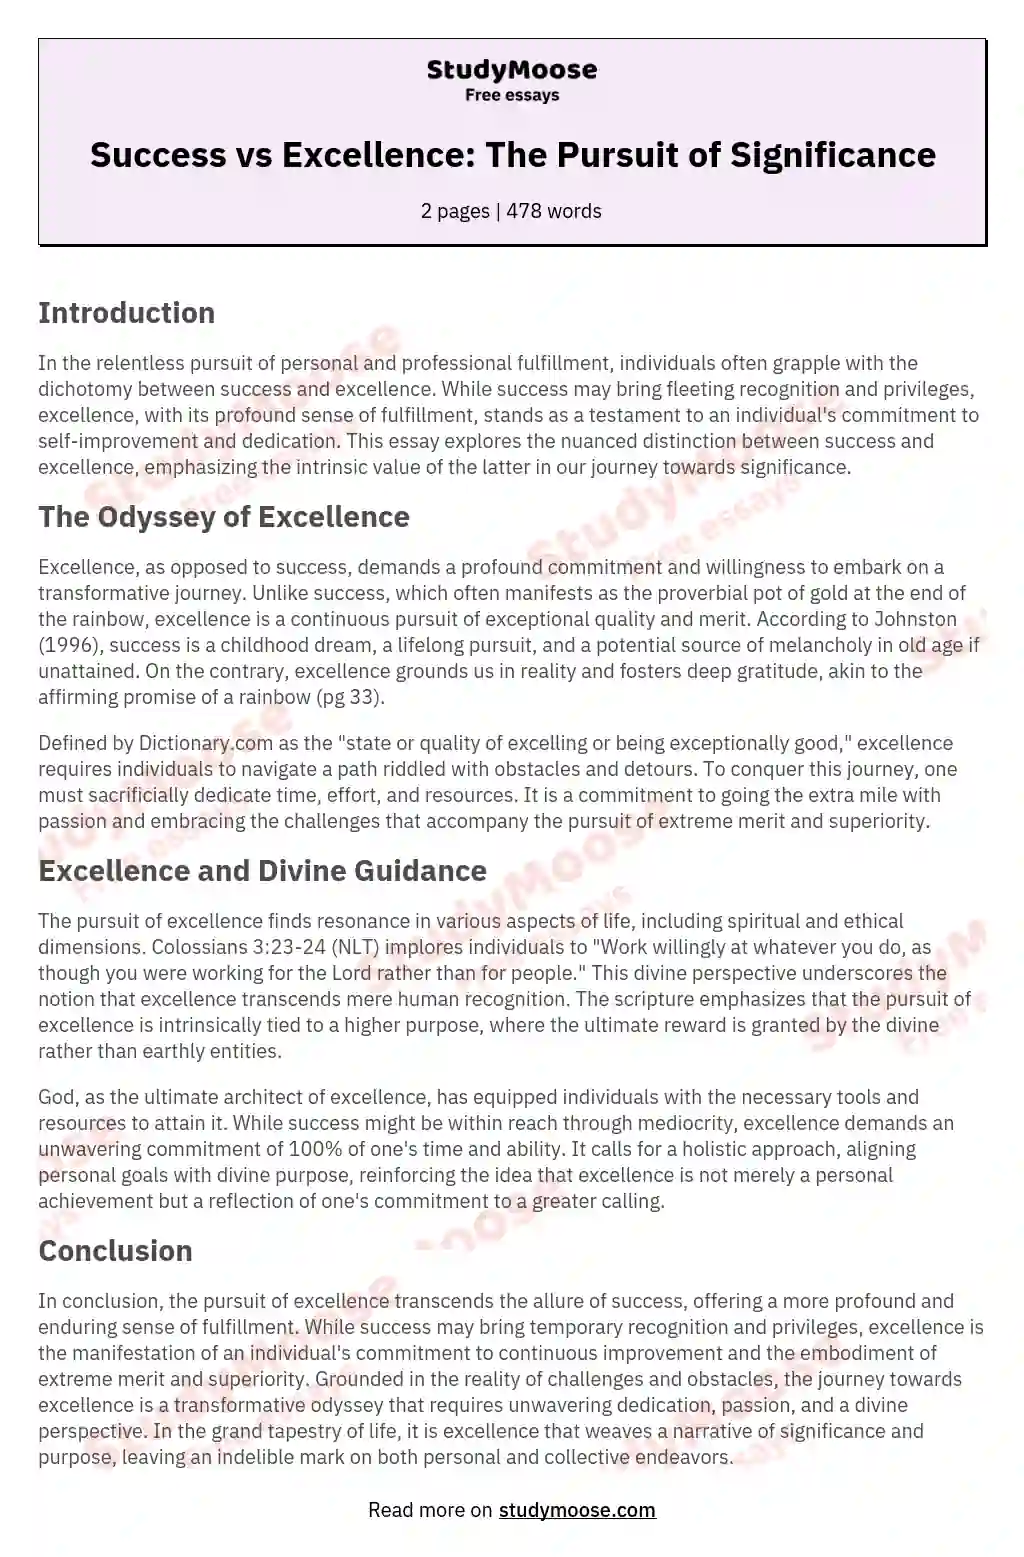 Success vs Excellence: The Pursuit of Significance essay